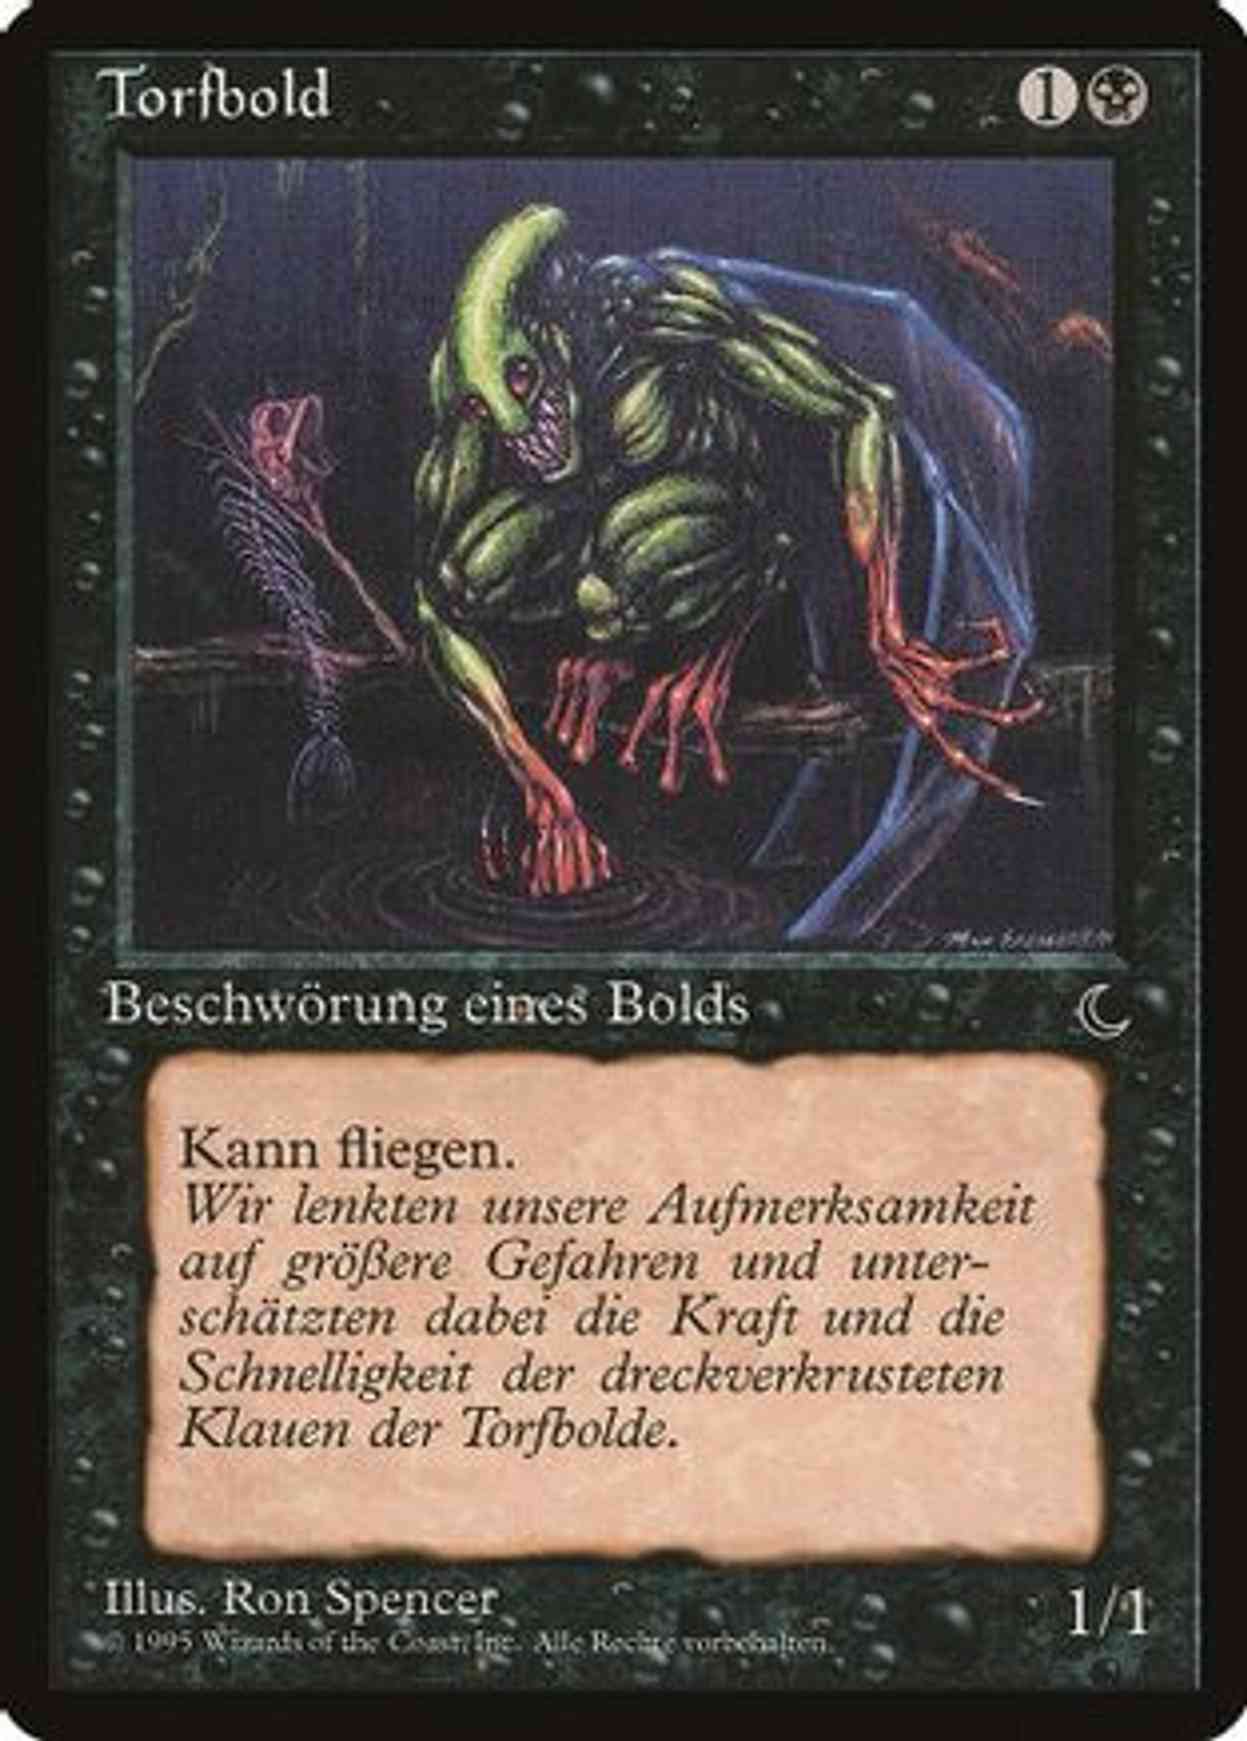 Bog Imp (German) - "Torfbold" magic card front